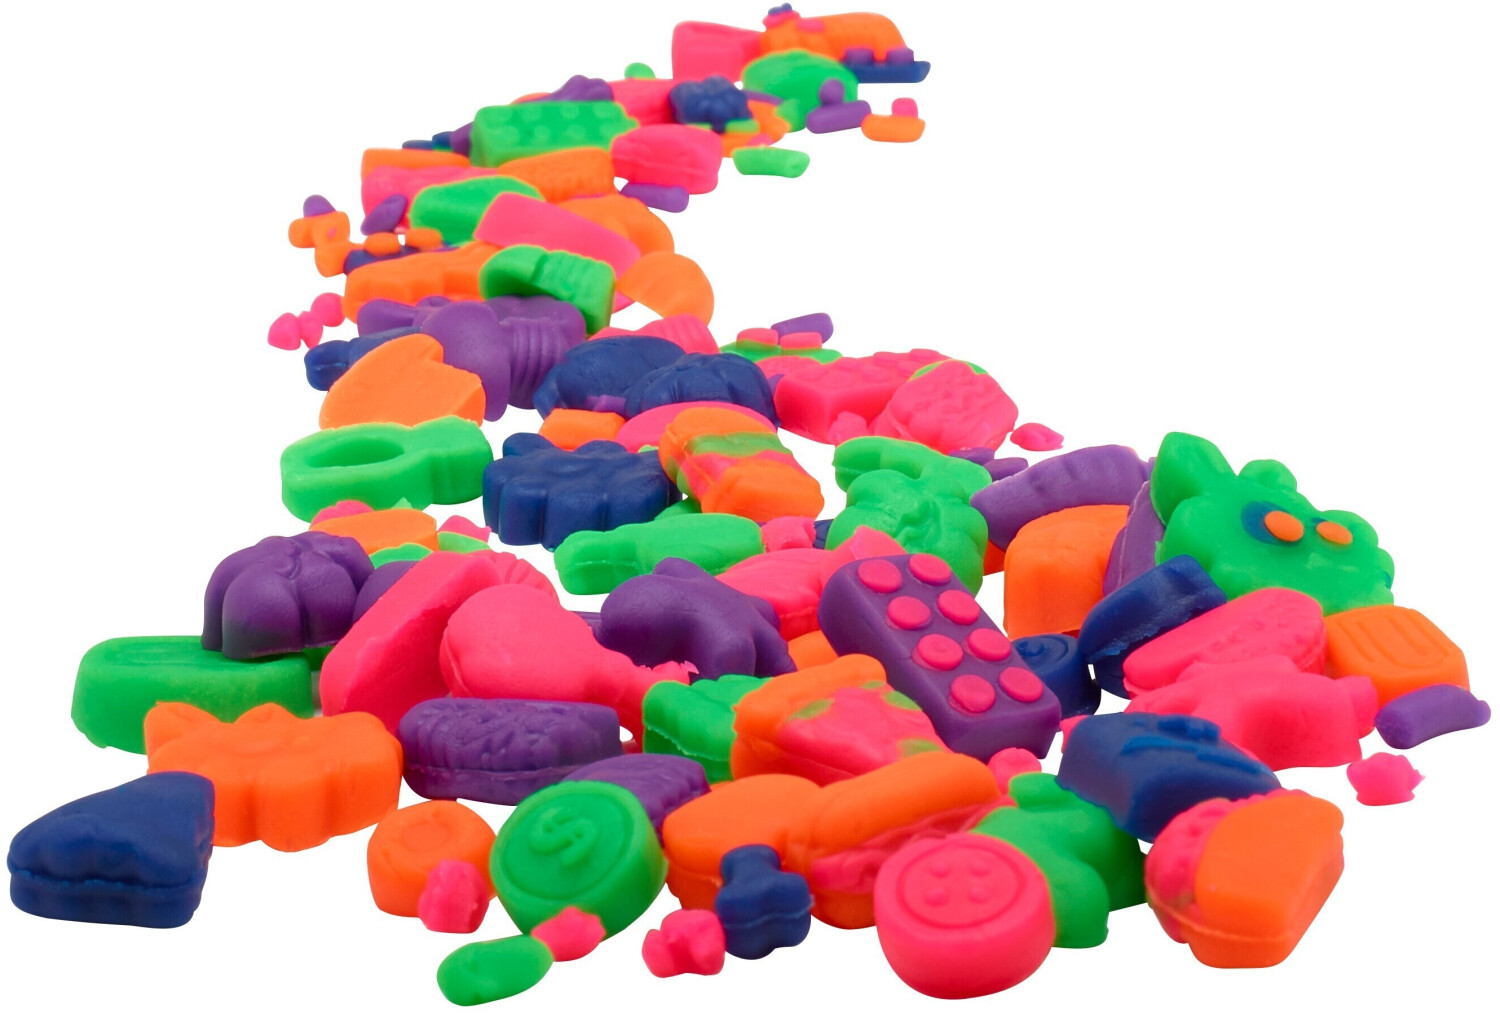 Promo Play-Doh Zoom Vacuum & Cleanup Set F3642 Diskon 50% di